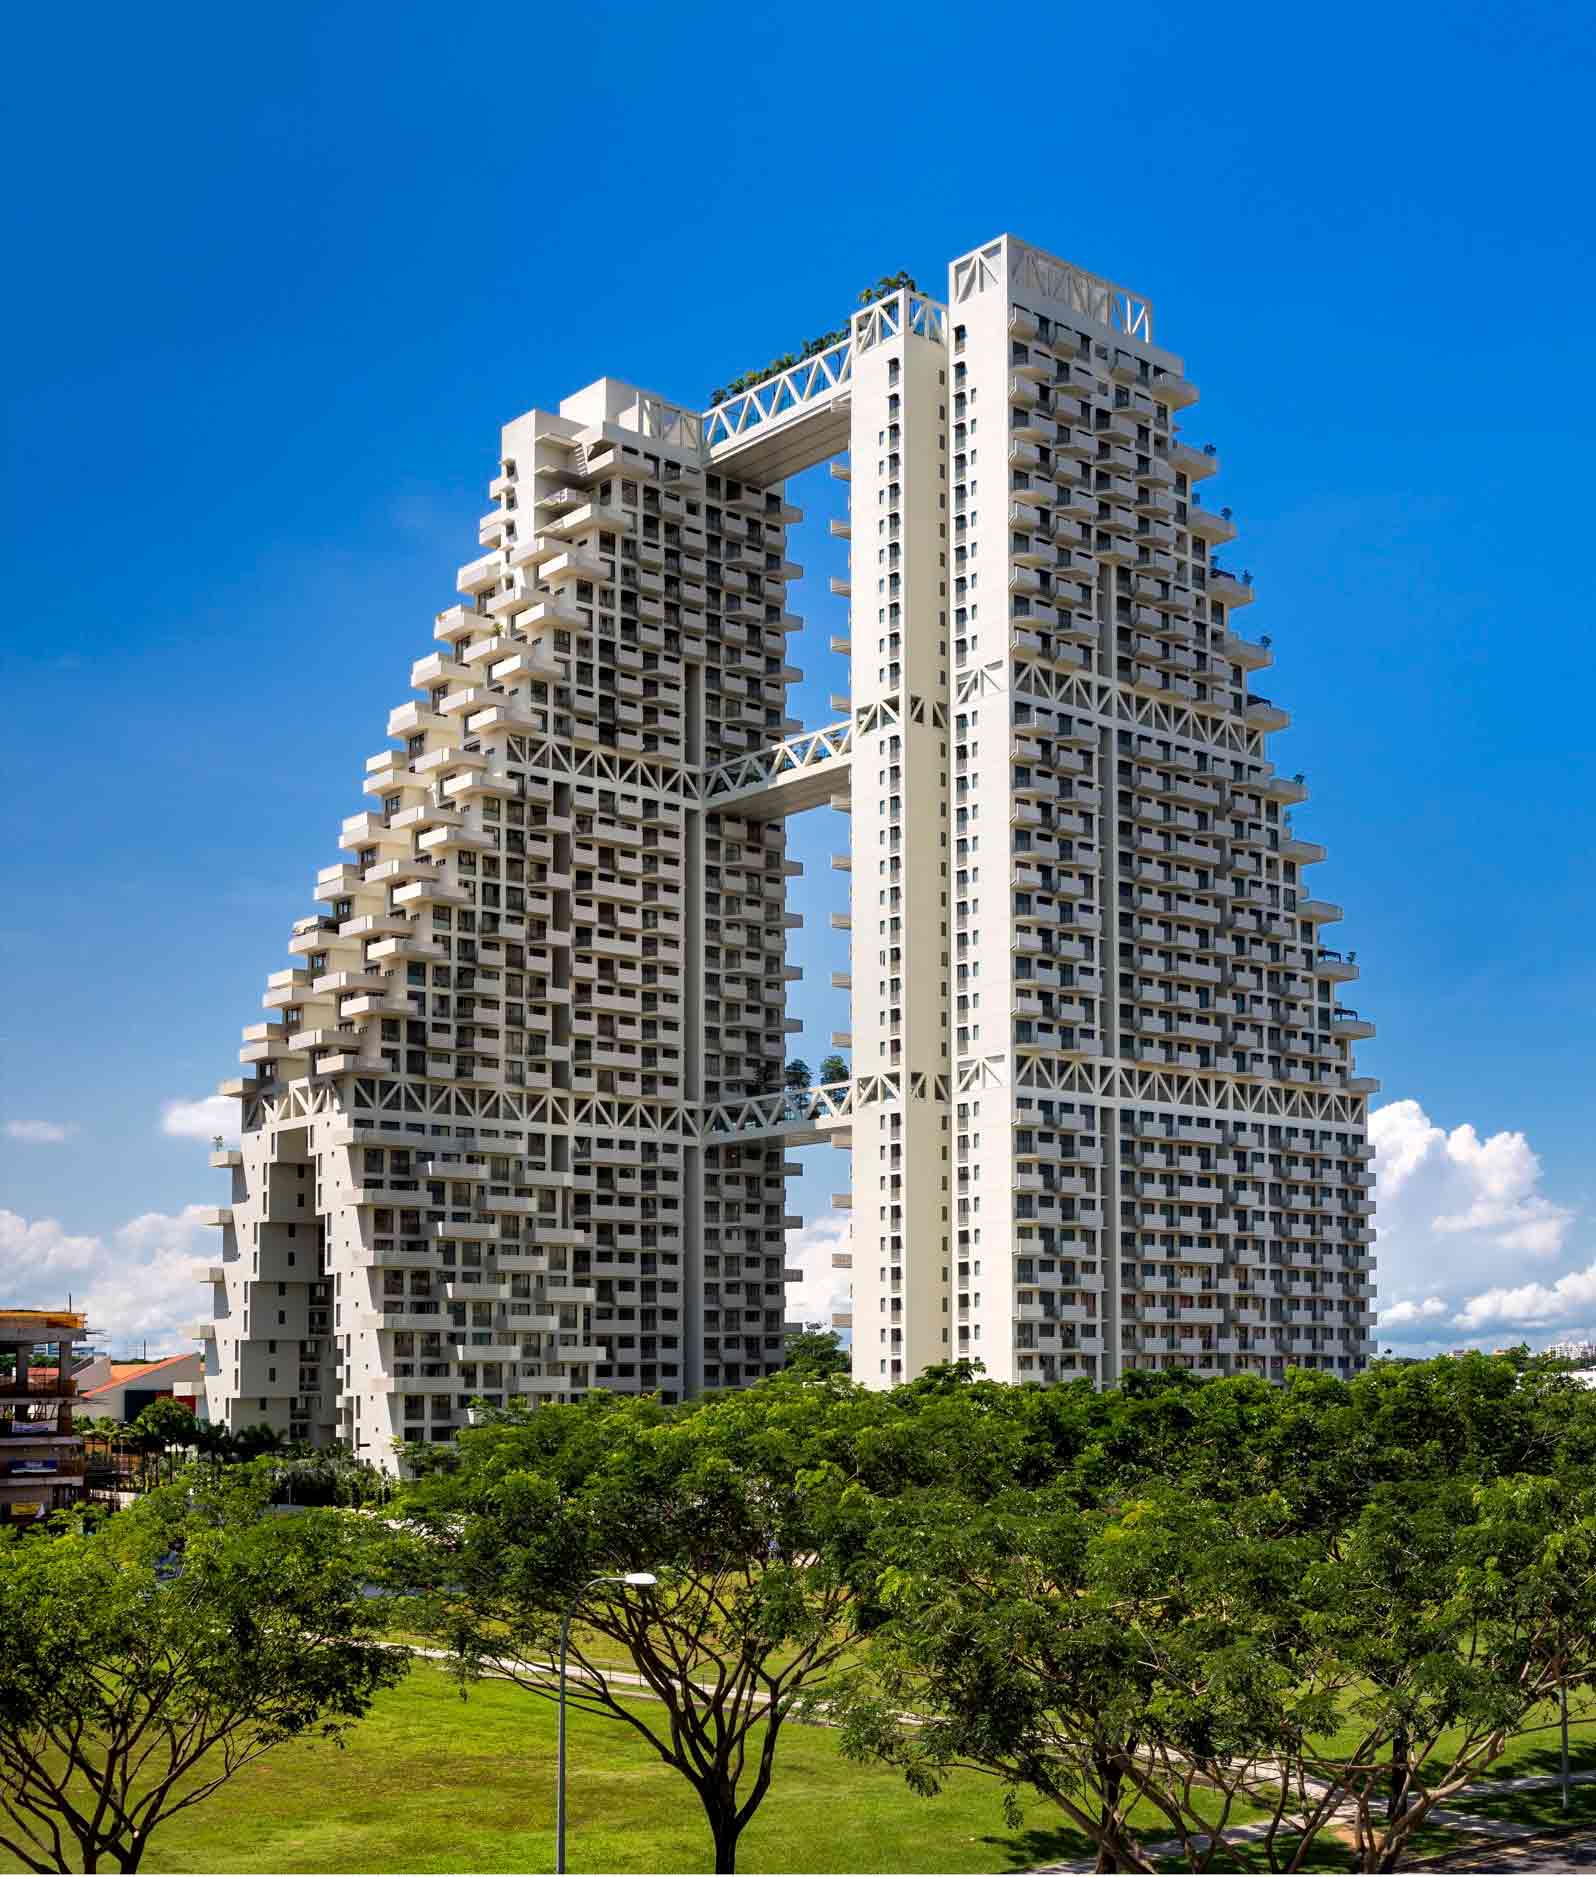 Sky Habitat by Safdie Architects